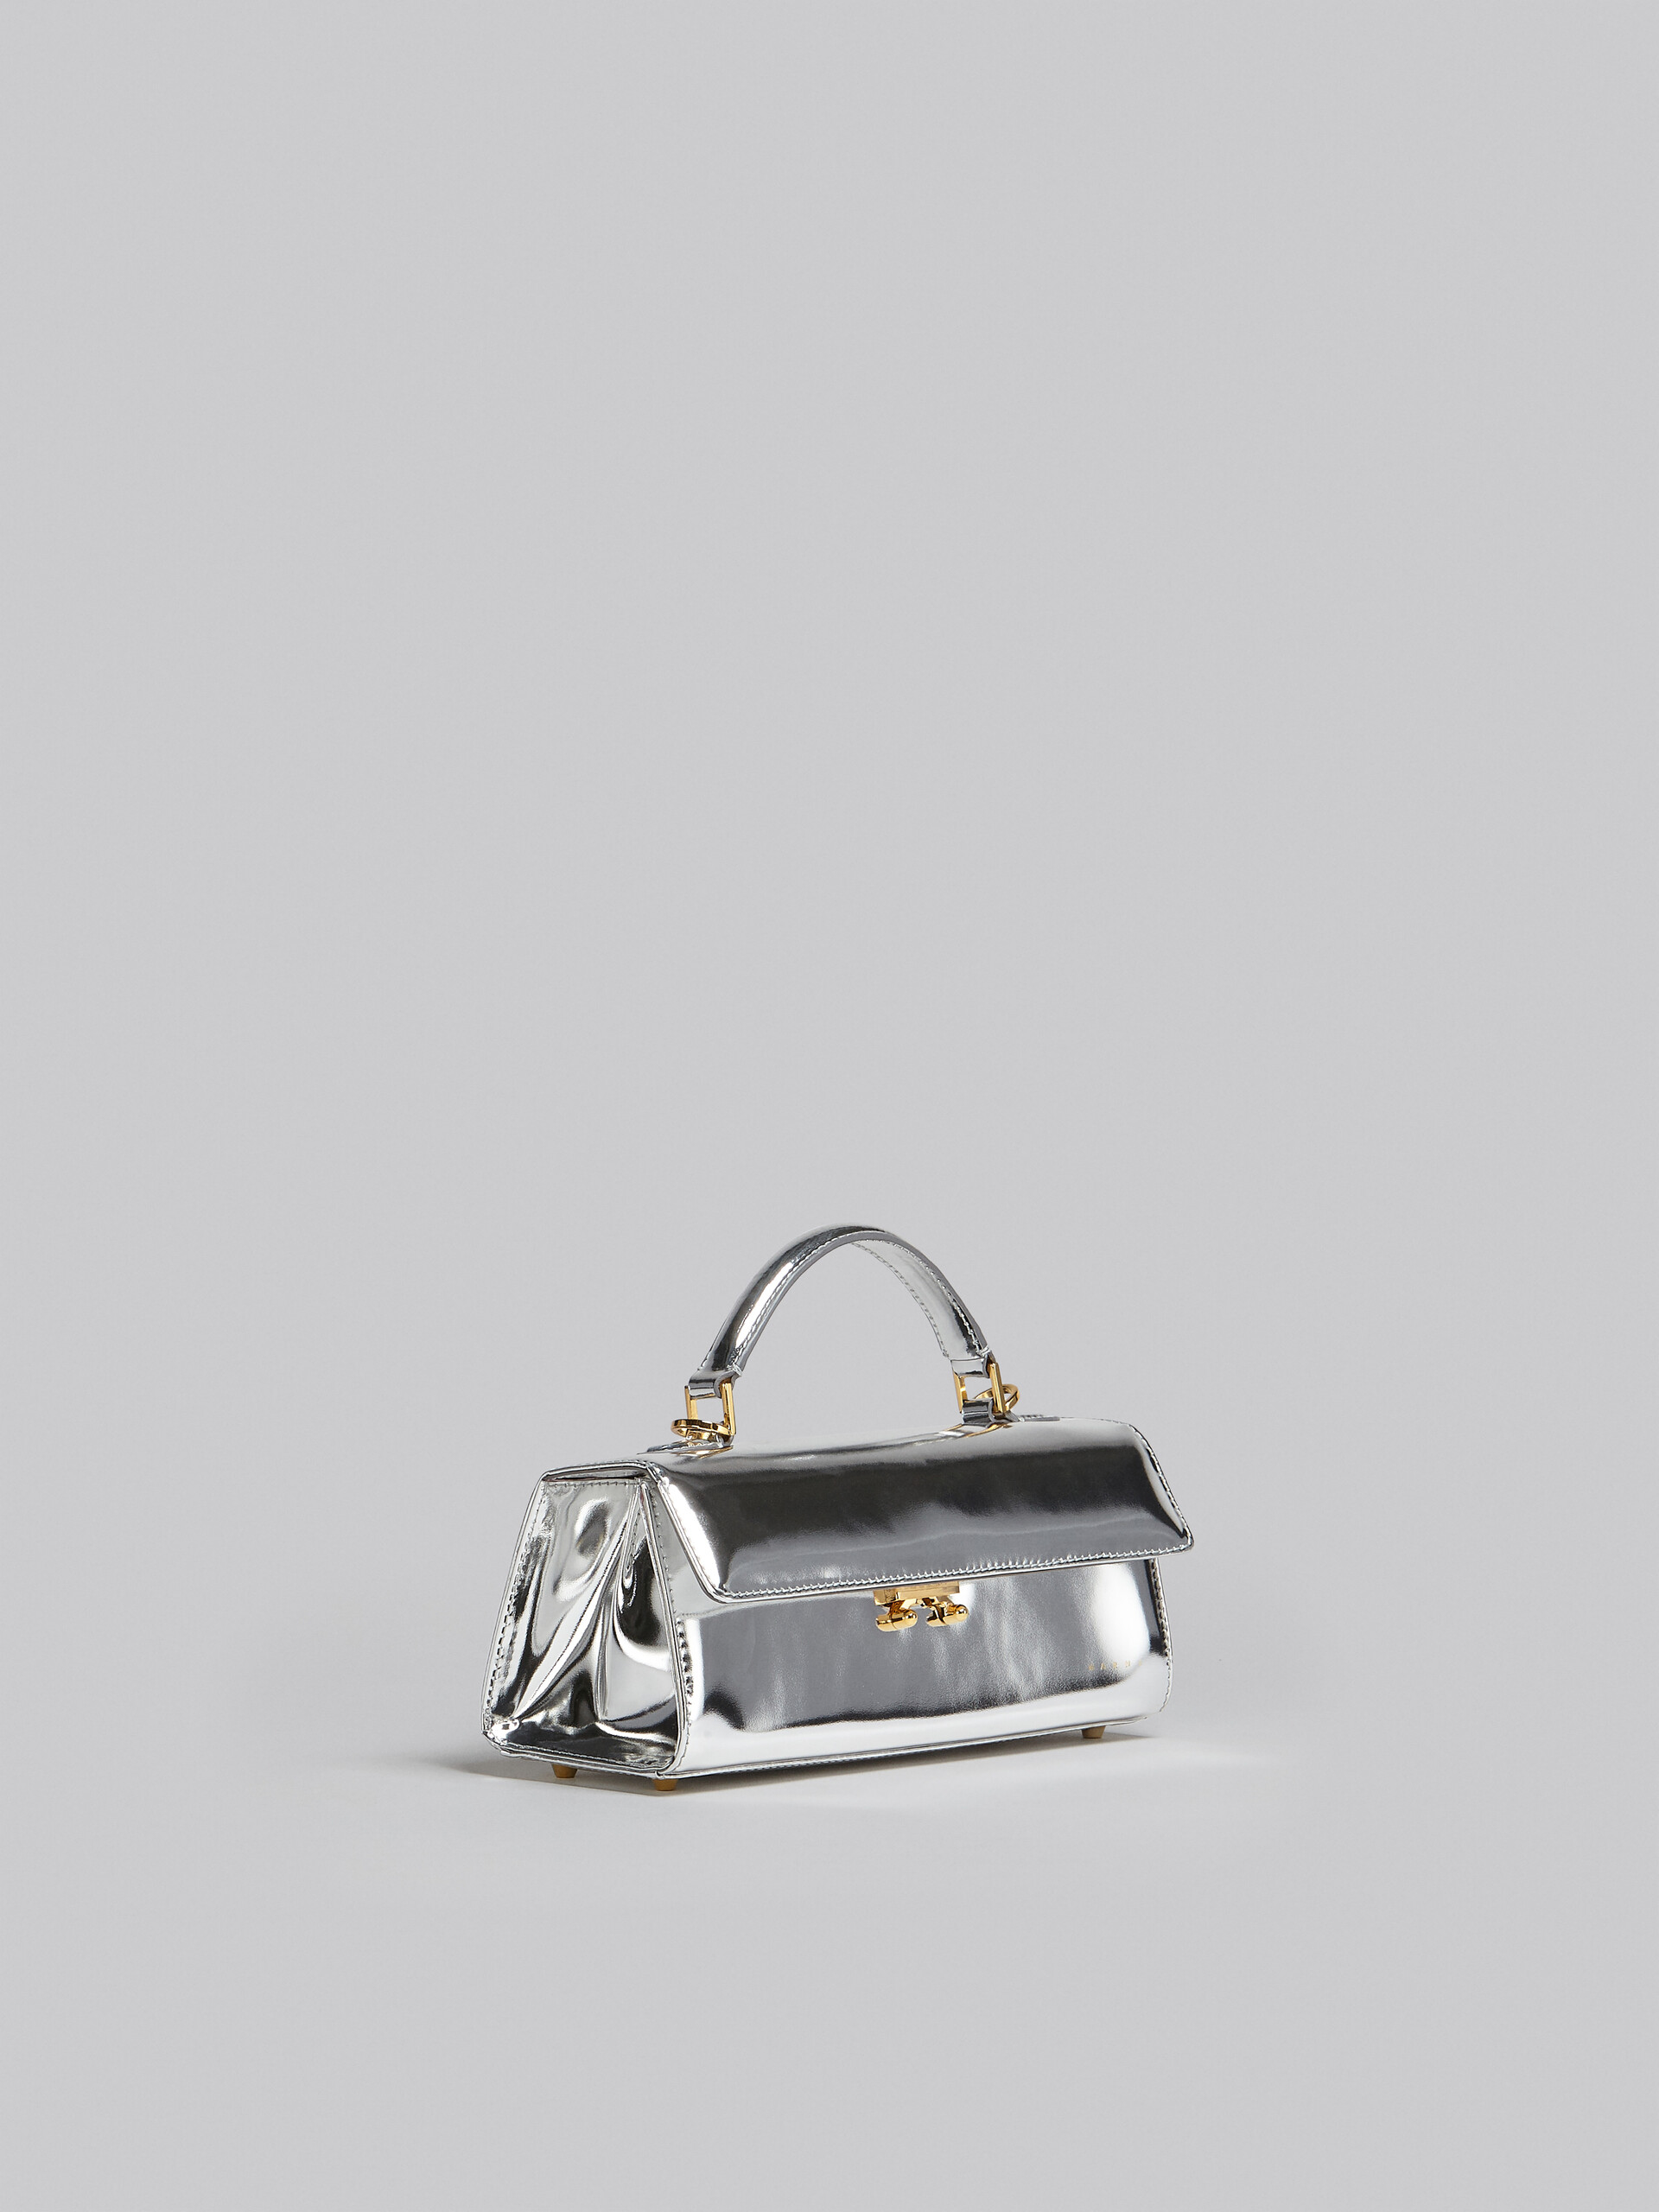 Relativity Medium Bag in silver mirrored leather - Handbags - Image 5